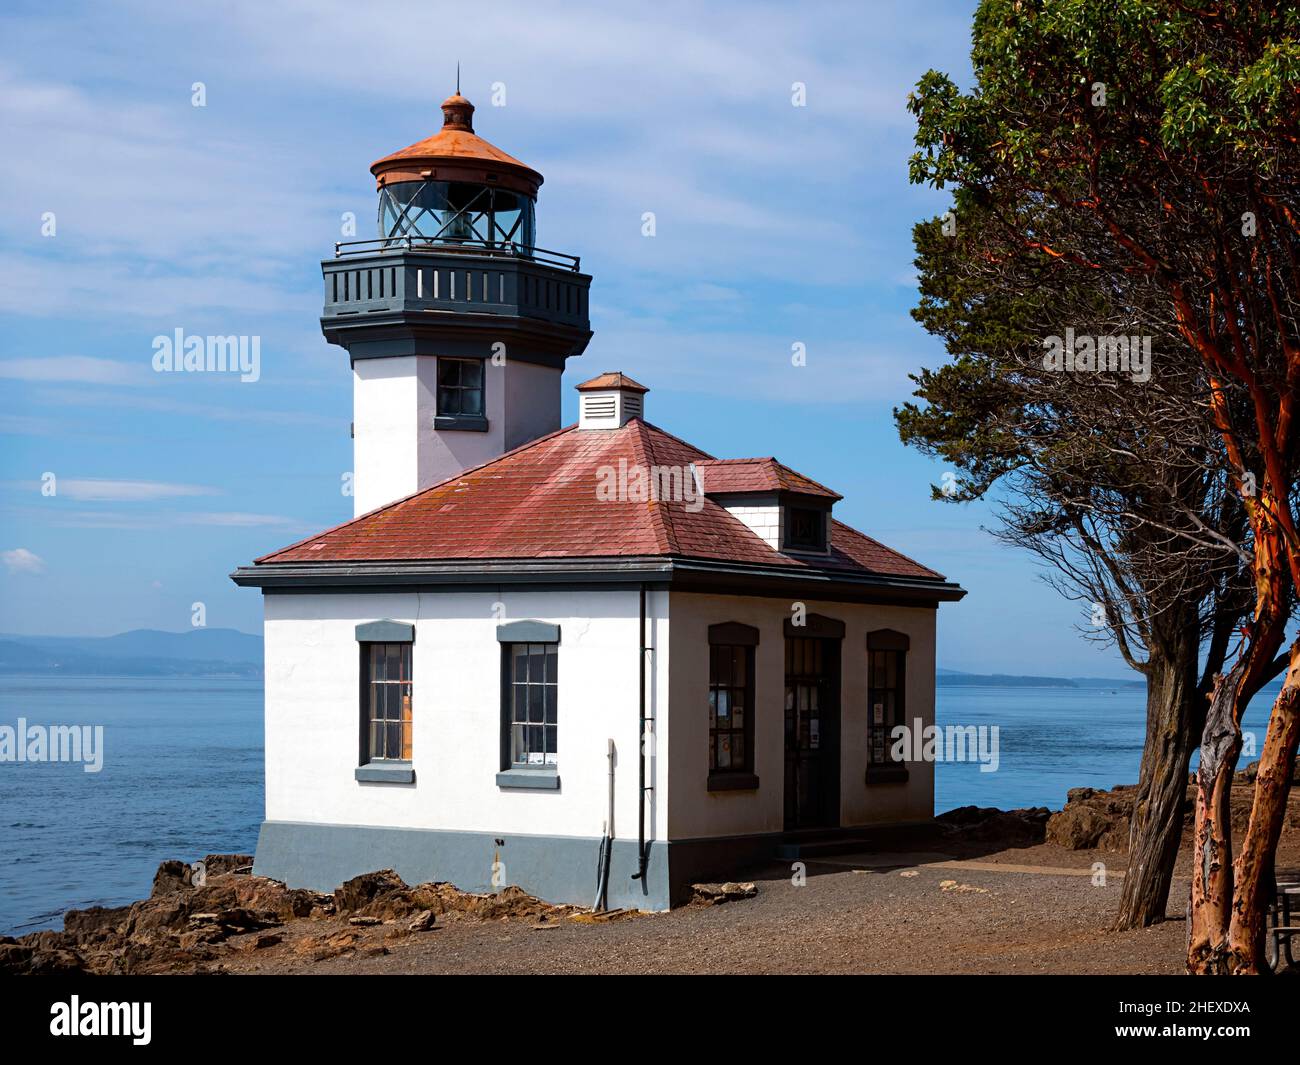 WA21110-00...WASHINGTON - Lime Kiln Lighthouse located on the edge of Haro Strait on San Juan Island. Stock Photo